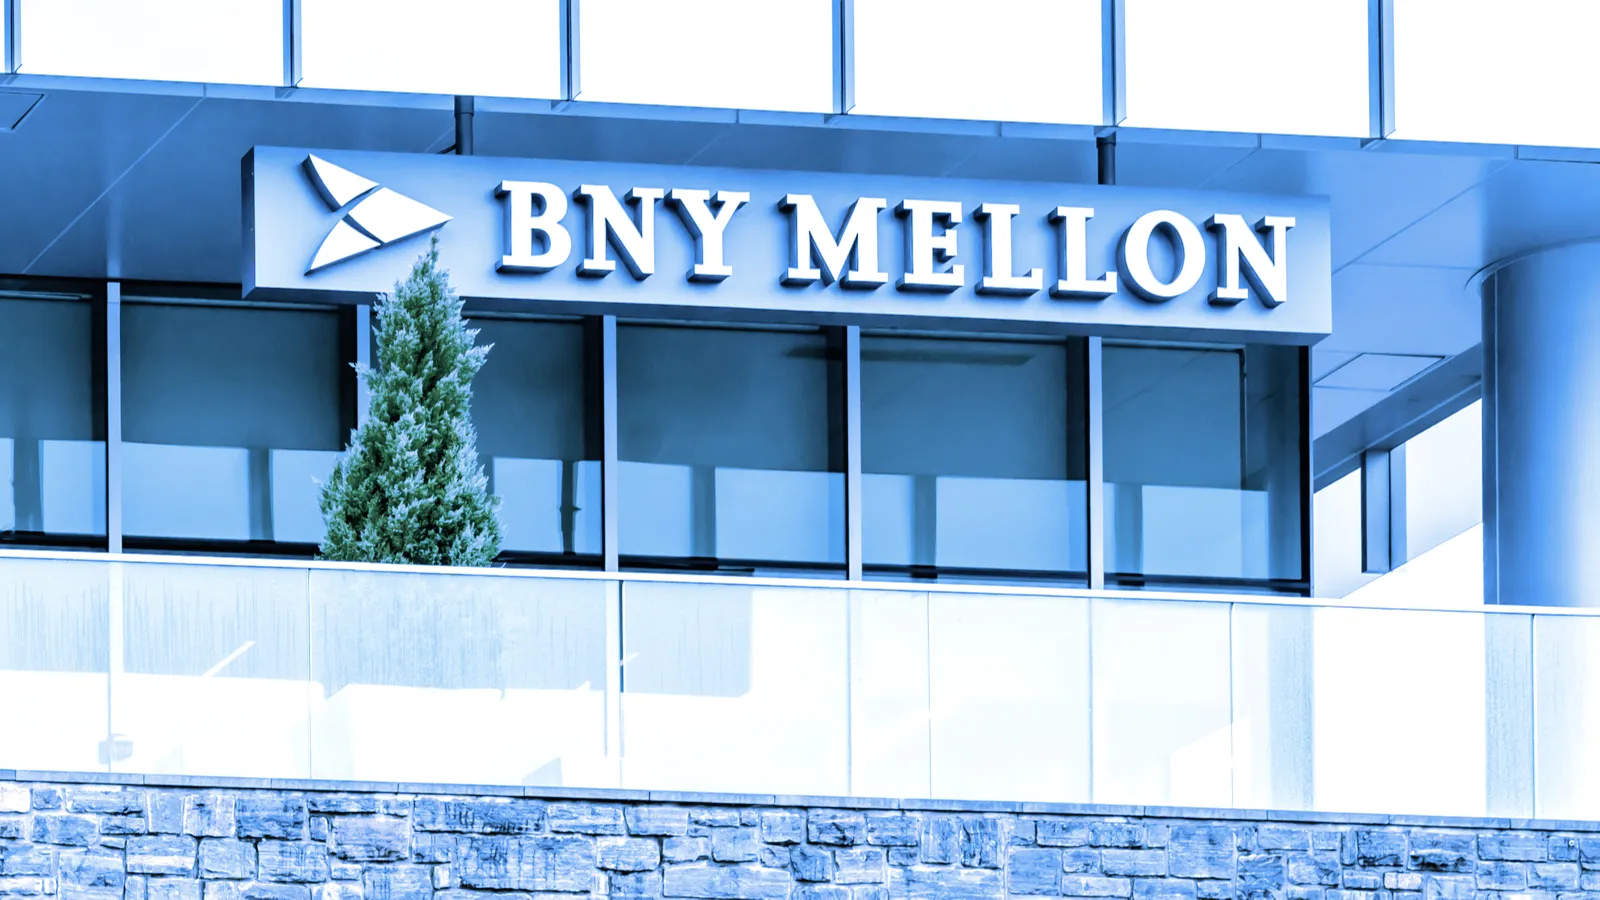 BNY Mellon. Image: Shutterstock